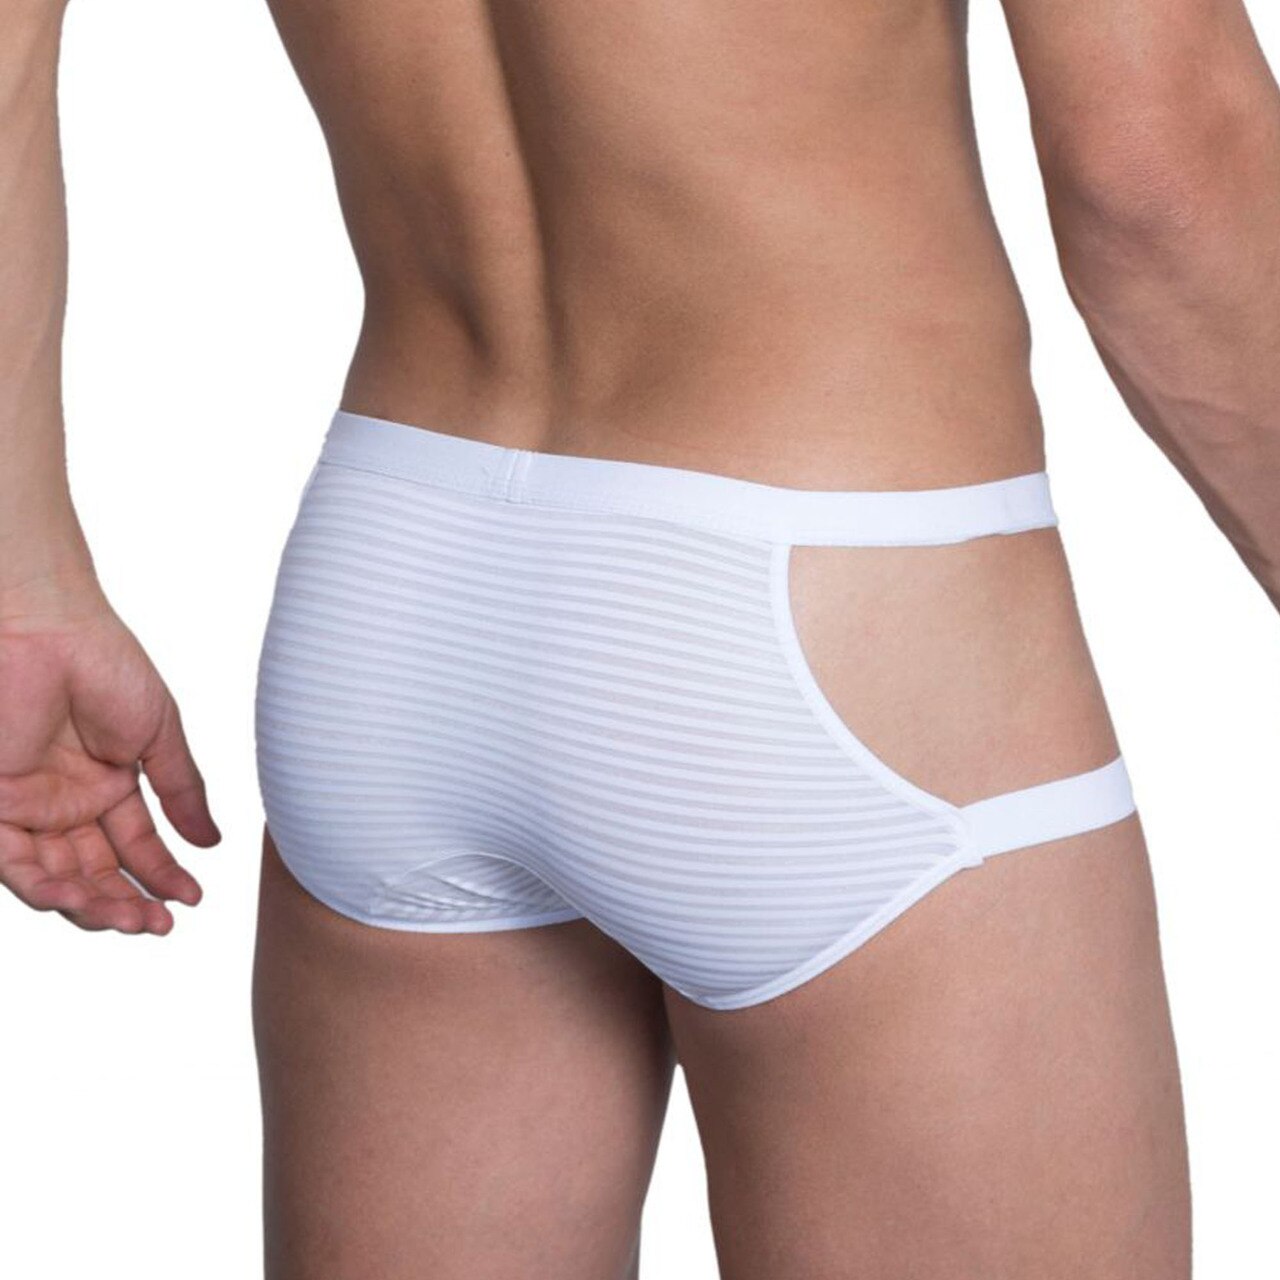 SALE - Mens Hidden Seduction Stretch Spandex Brief with Open Sides White